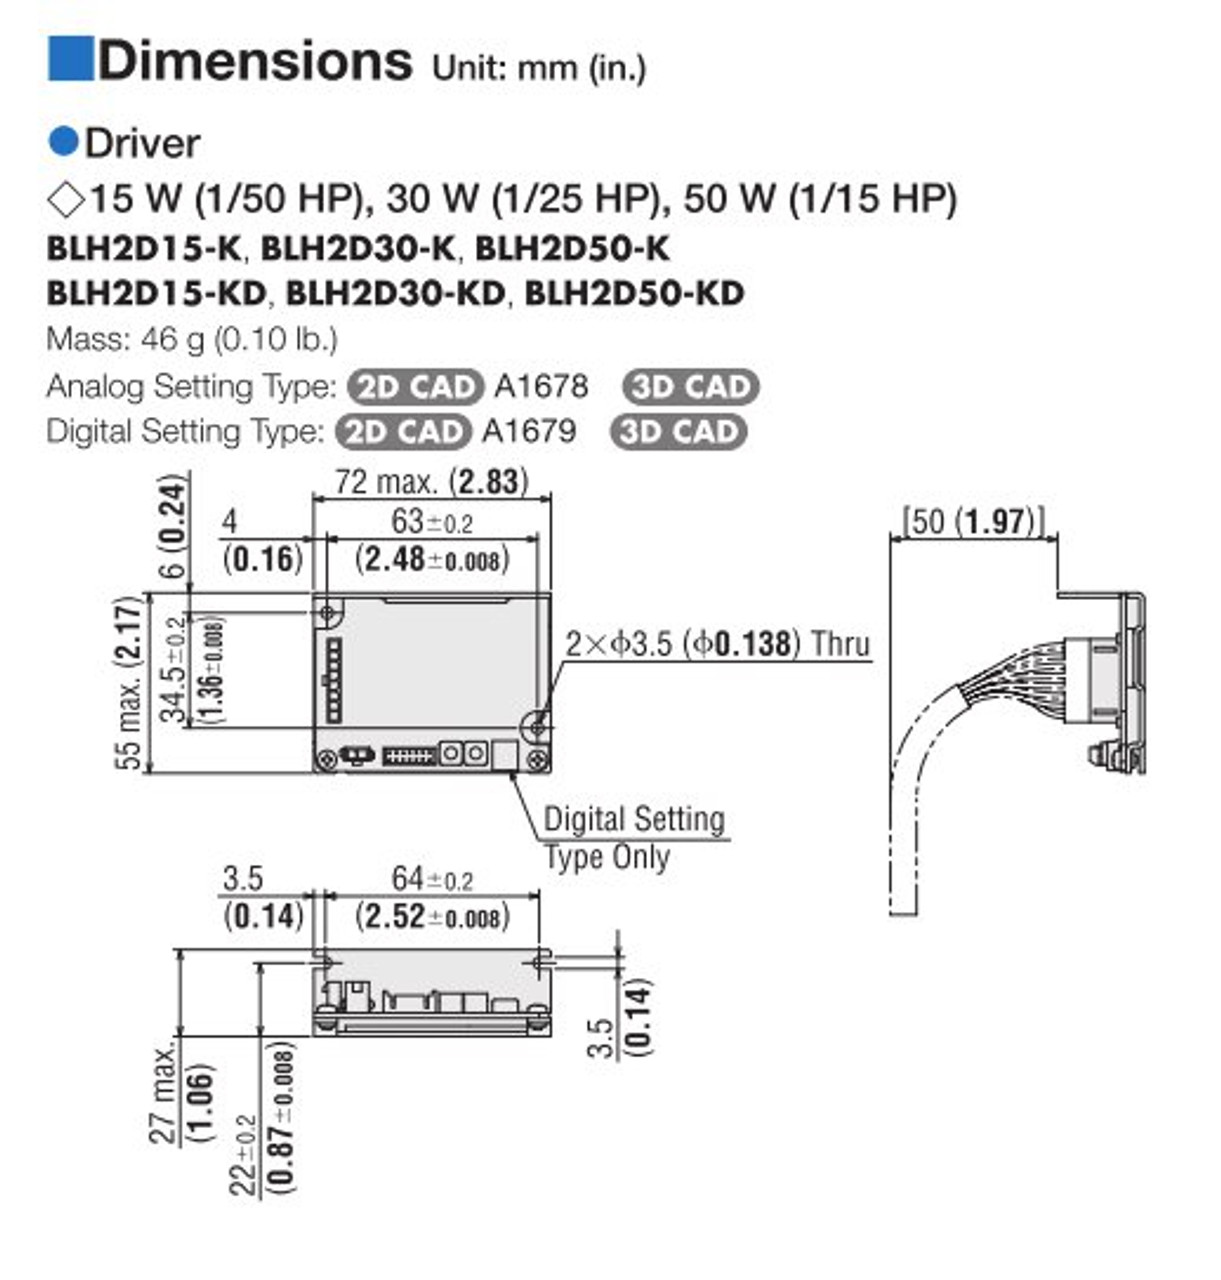 BLHM450KC-20 / BLH2D50-K - Dimensions